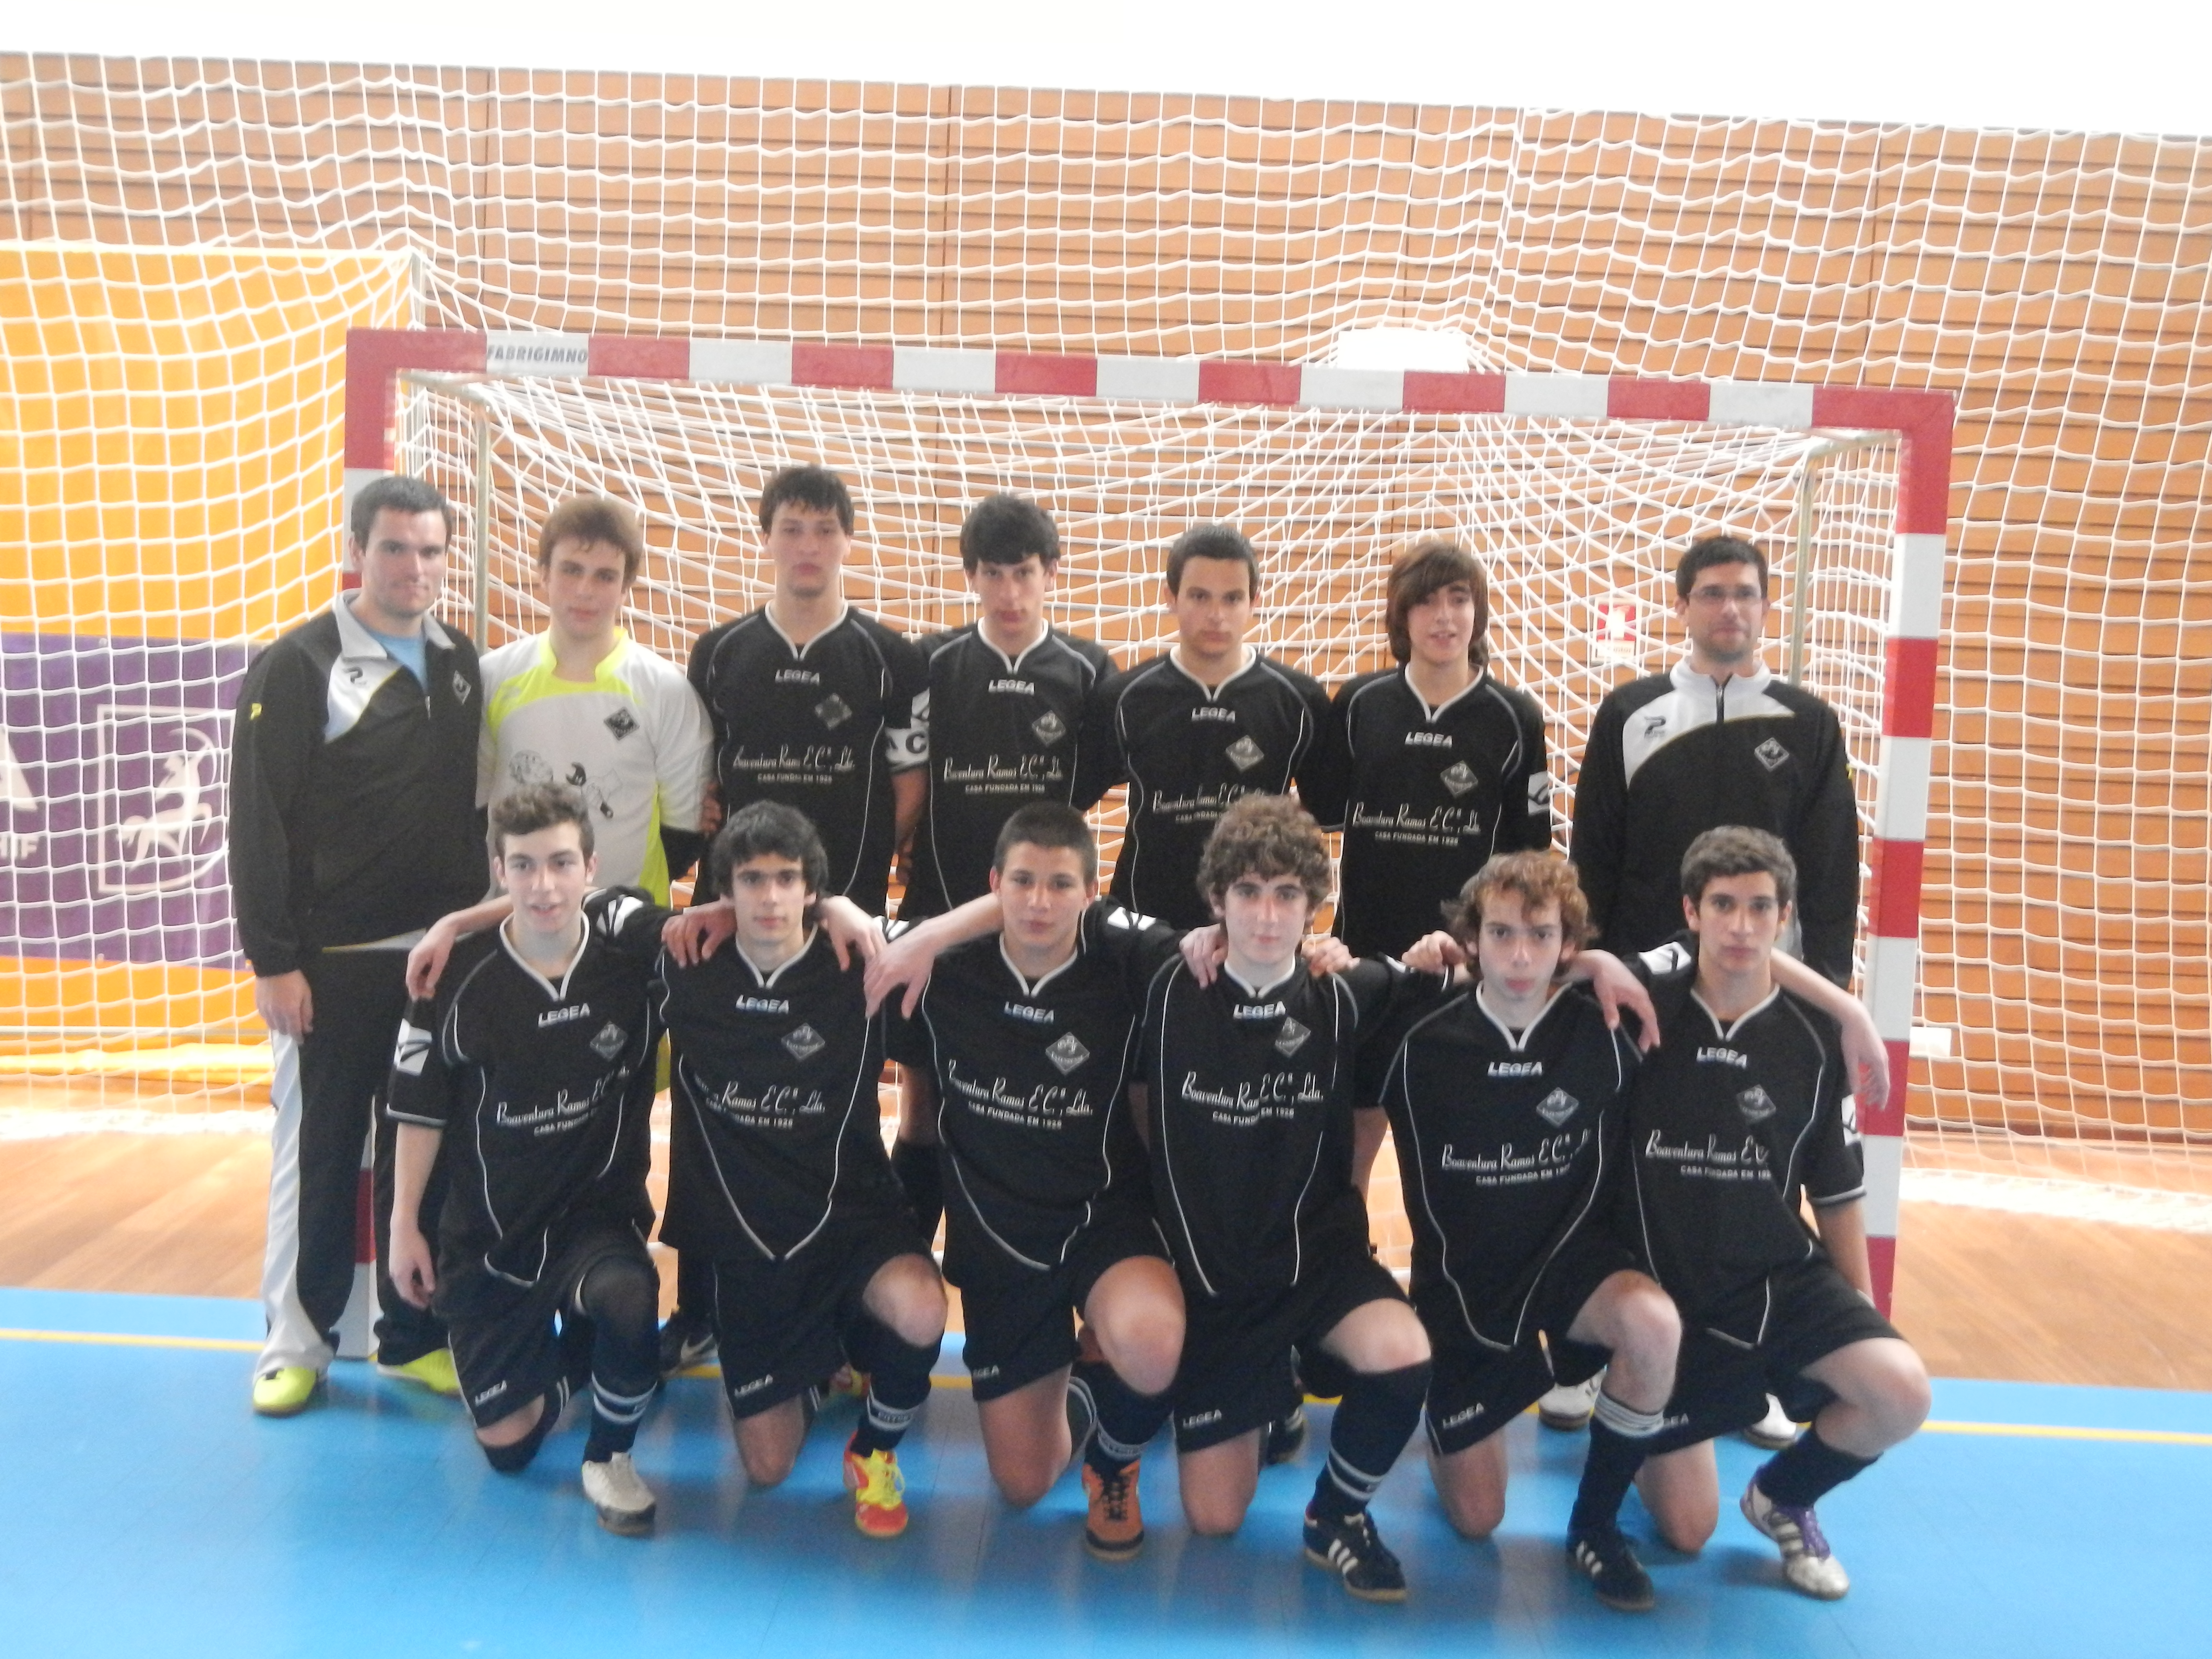 Grupo Desportivo Fazendense - 3ºClassificado no Campeonato Regional da Juniores de Futsal